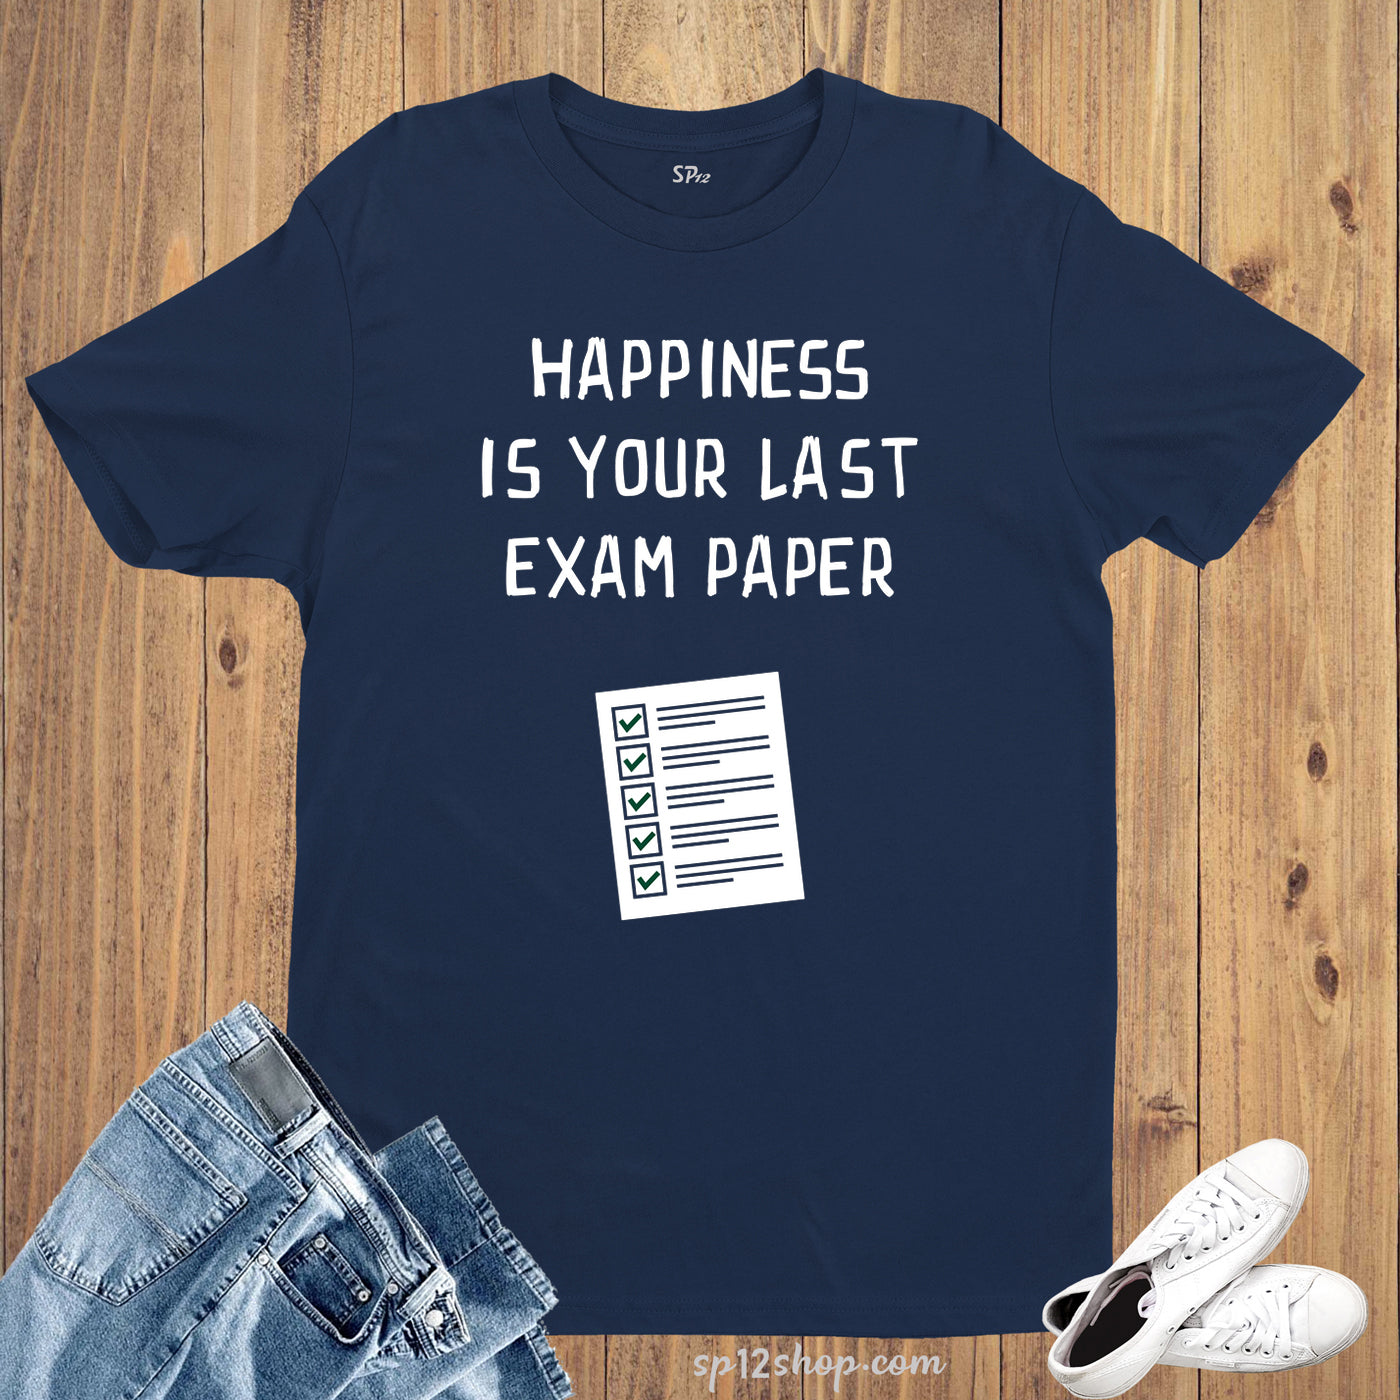 Exam Paper Happiness Life Quotes Slogan T Shirt